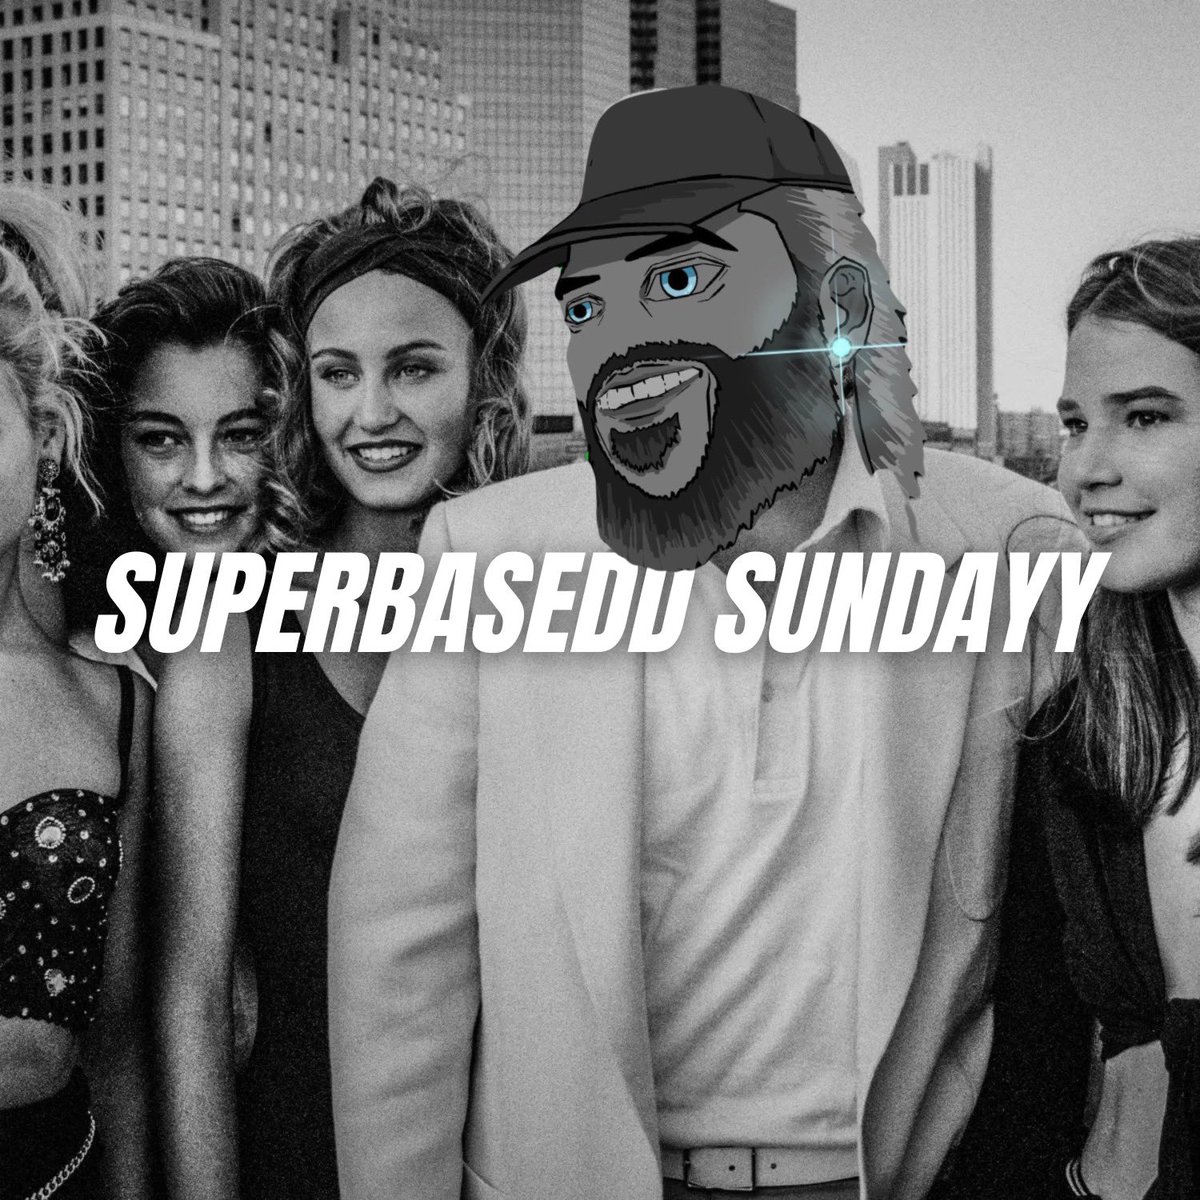 @SUPERBASEDD Sunday will never be the same